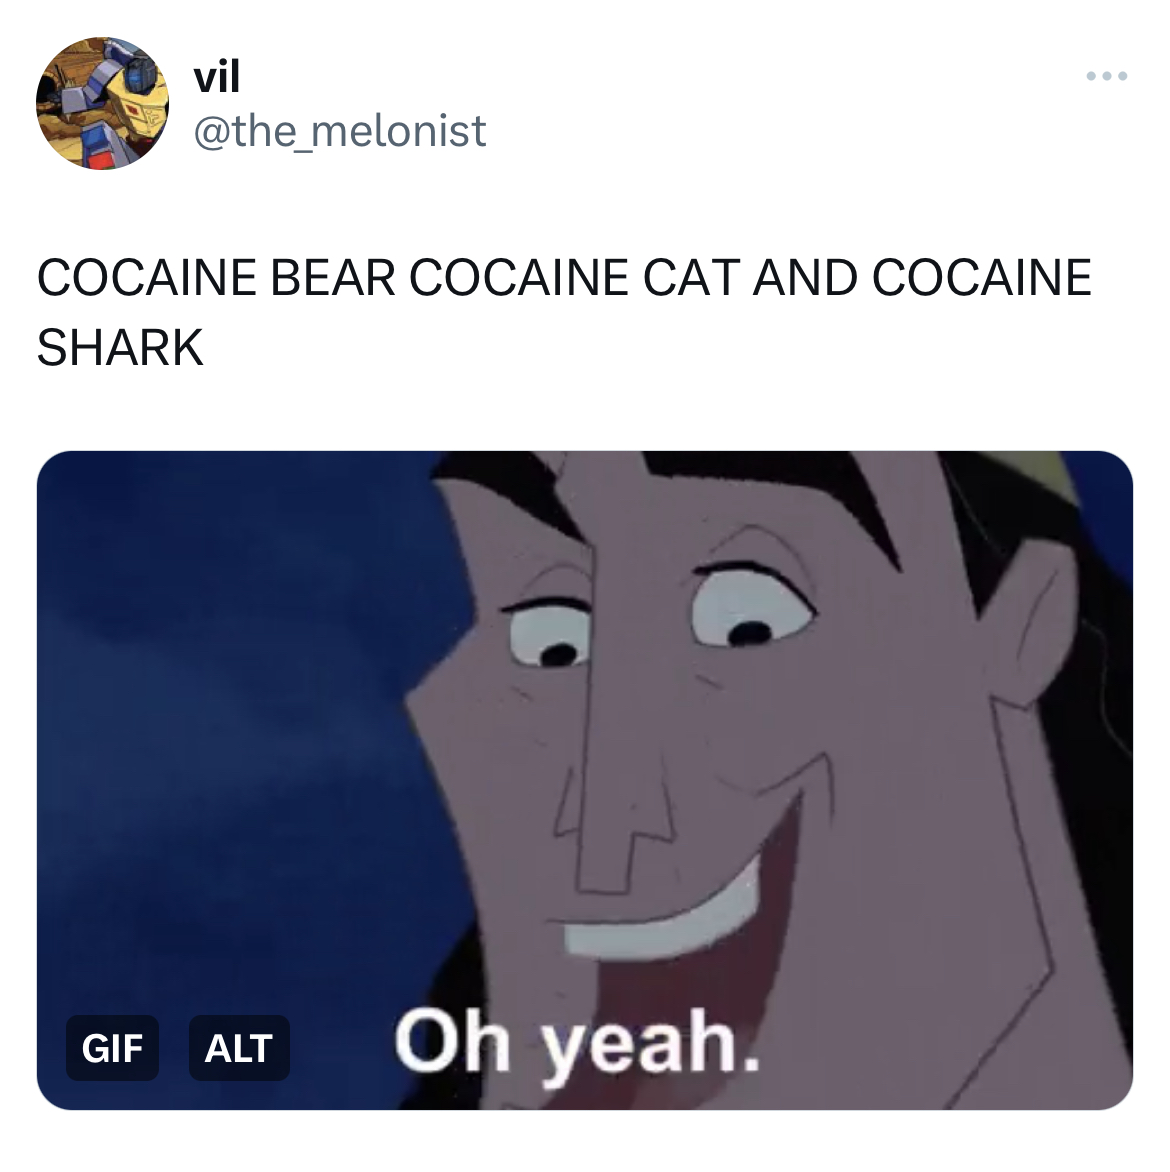 savage and funny tweets -cartoon - vil Cocaine Bear Cocaine Cat And Cocaine Shark Gif Alt Oh yeah.